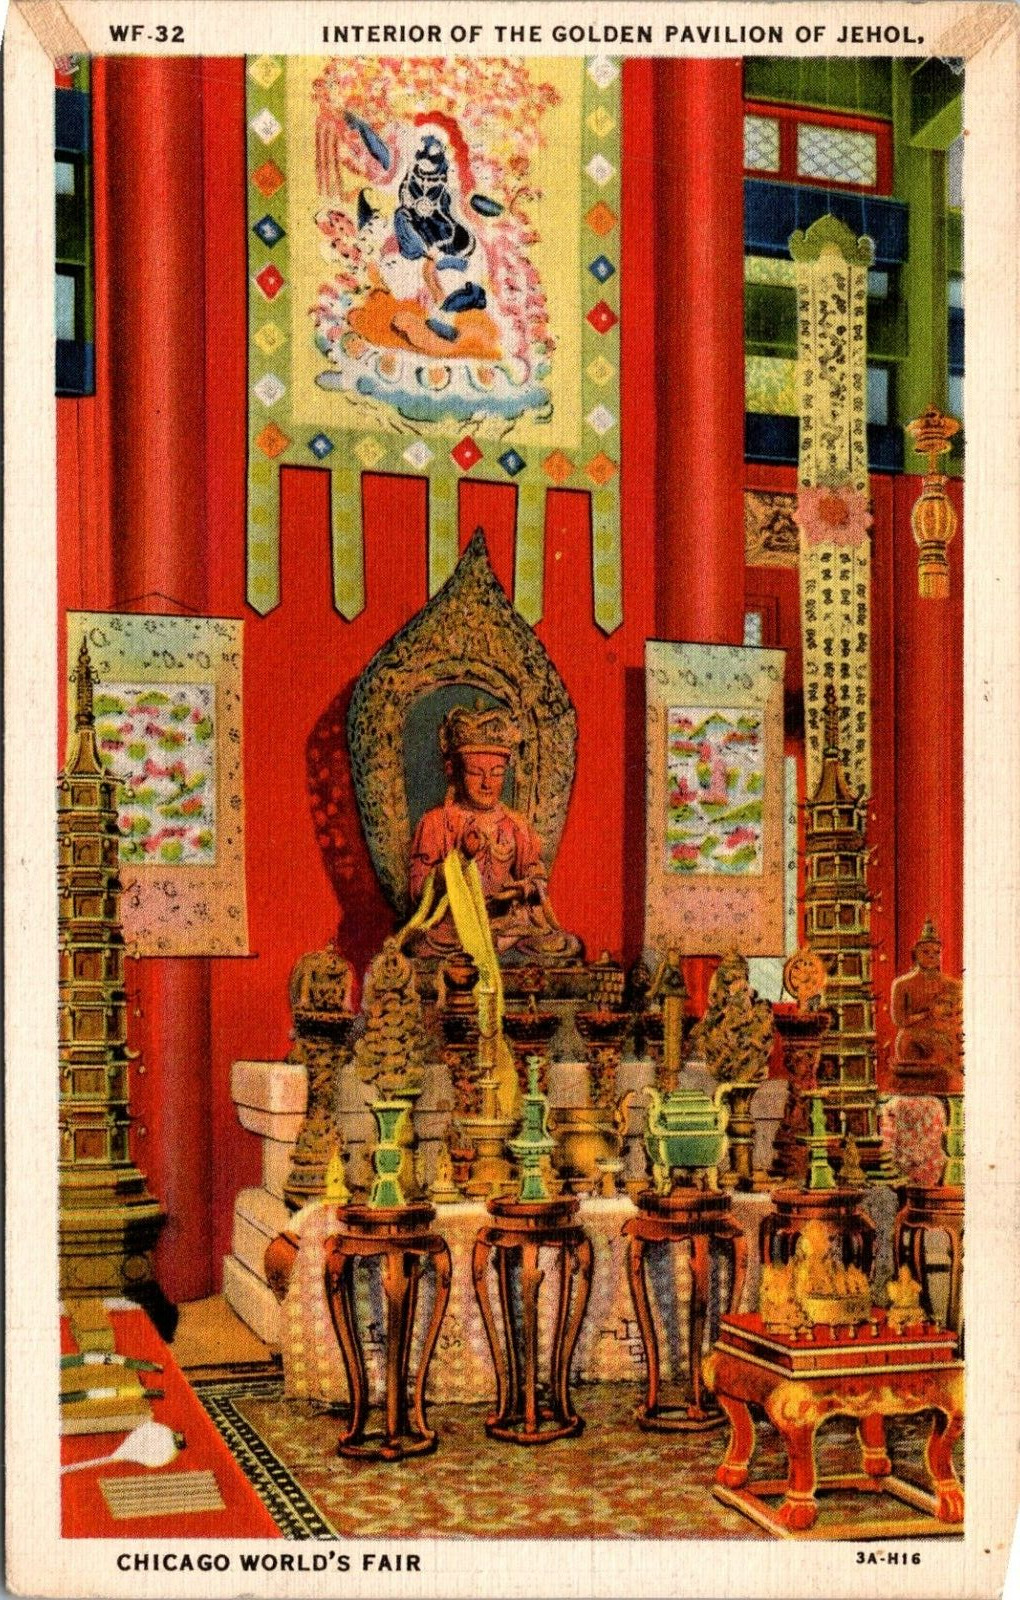 1934 Chicago World's Fair, Interior of the Golden Pavilion of Jehol, Postcard